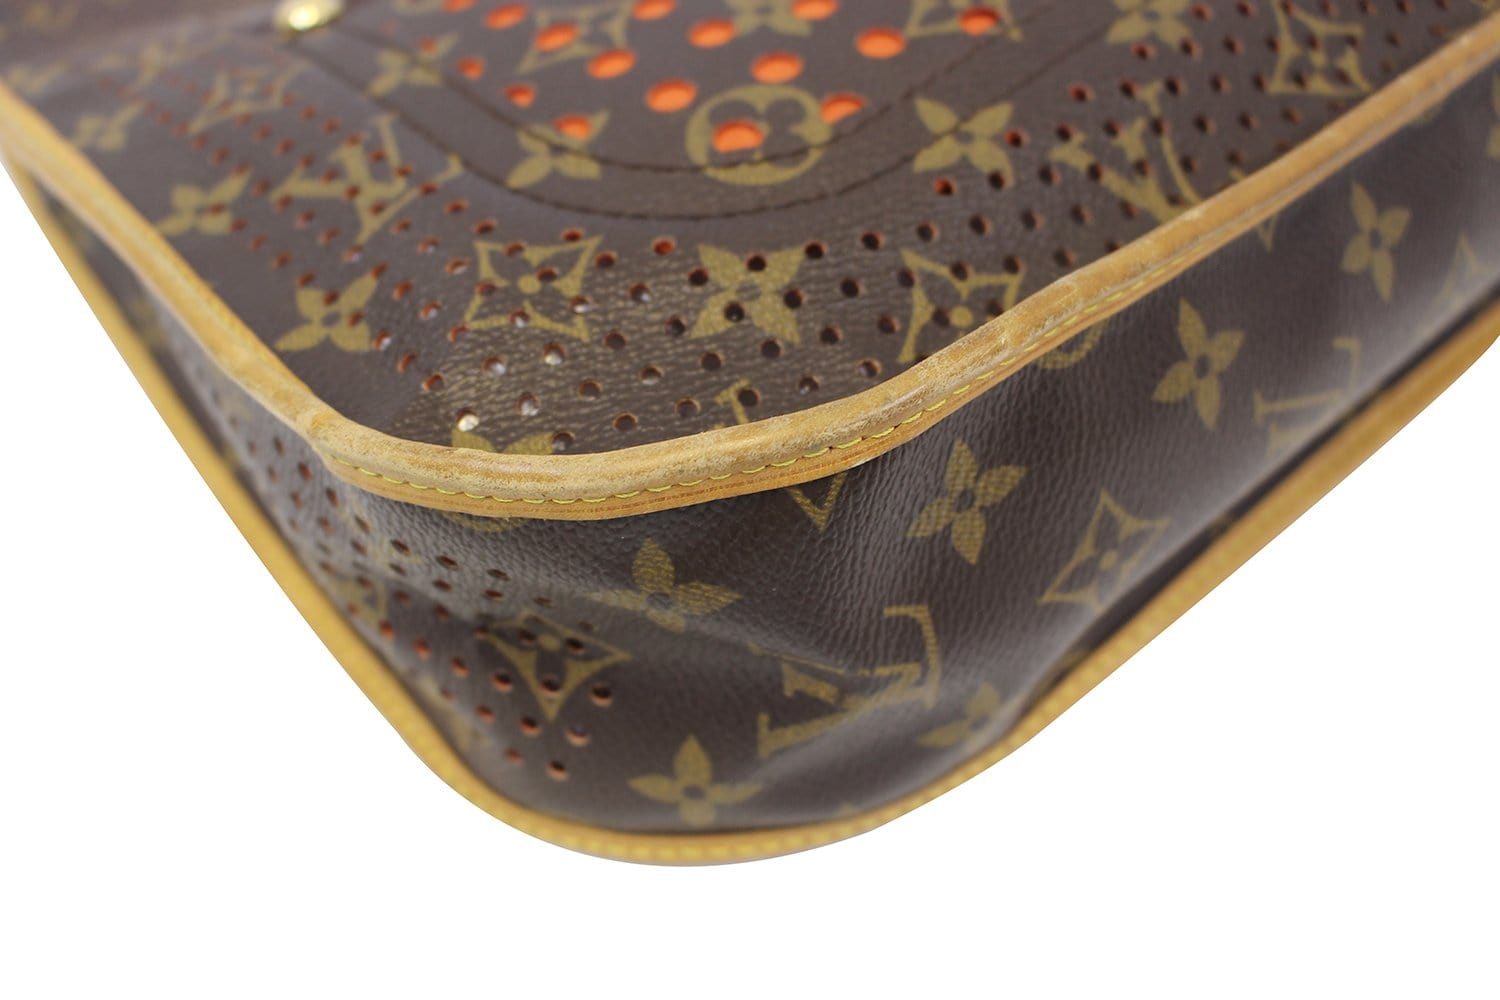 Louis Vuitton Sac Bandolier Shoulder Bag. 